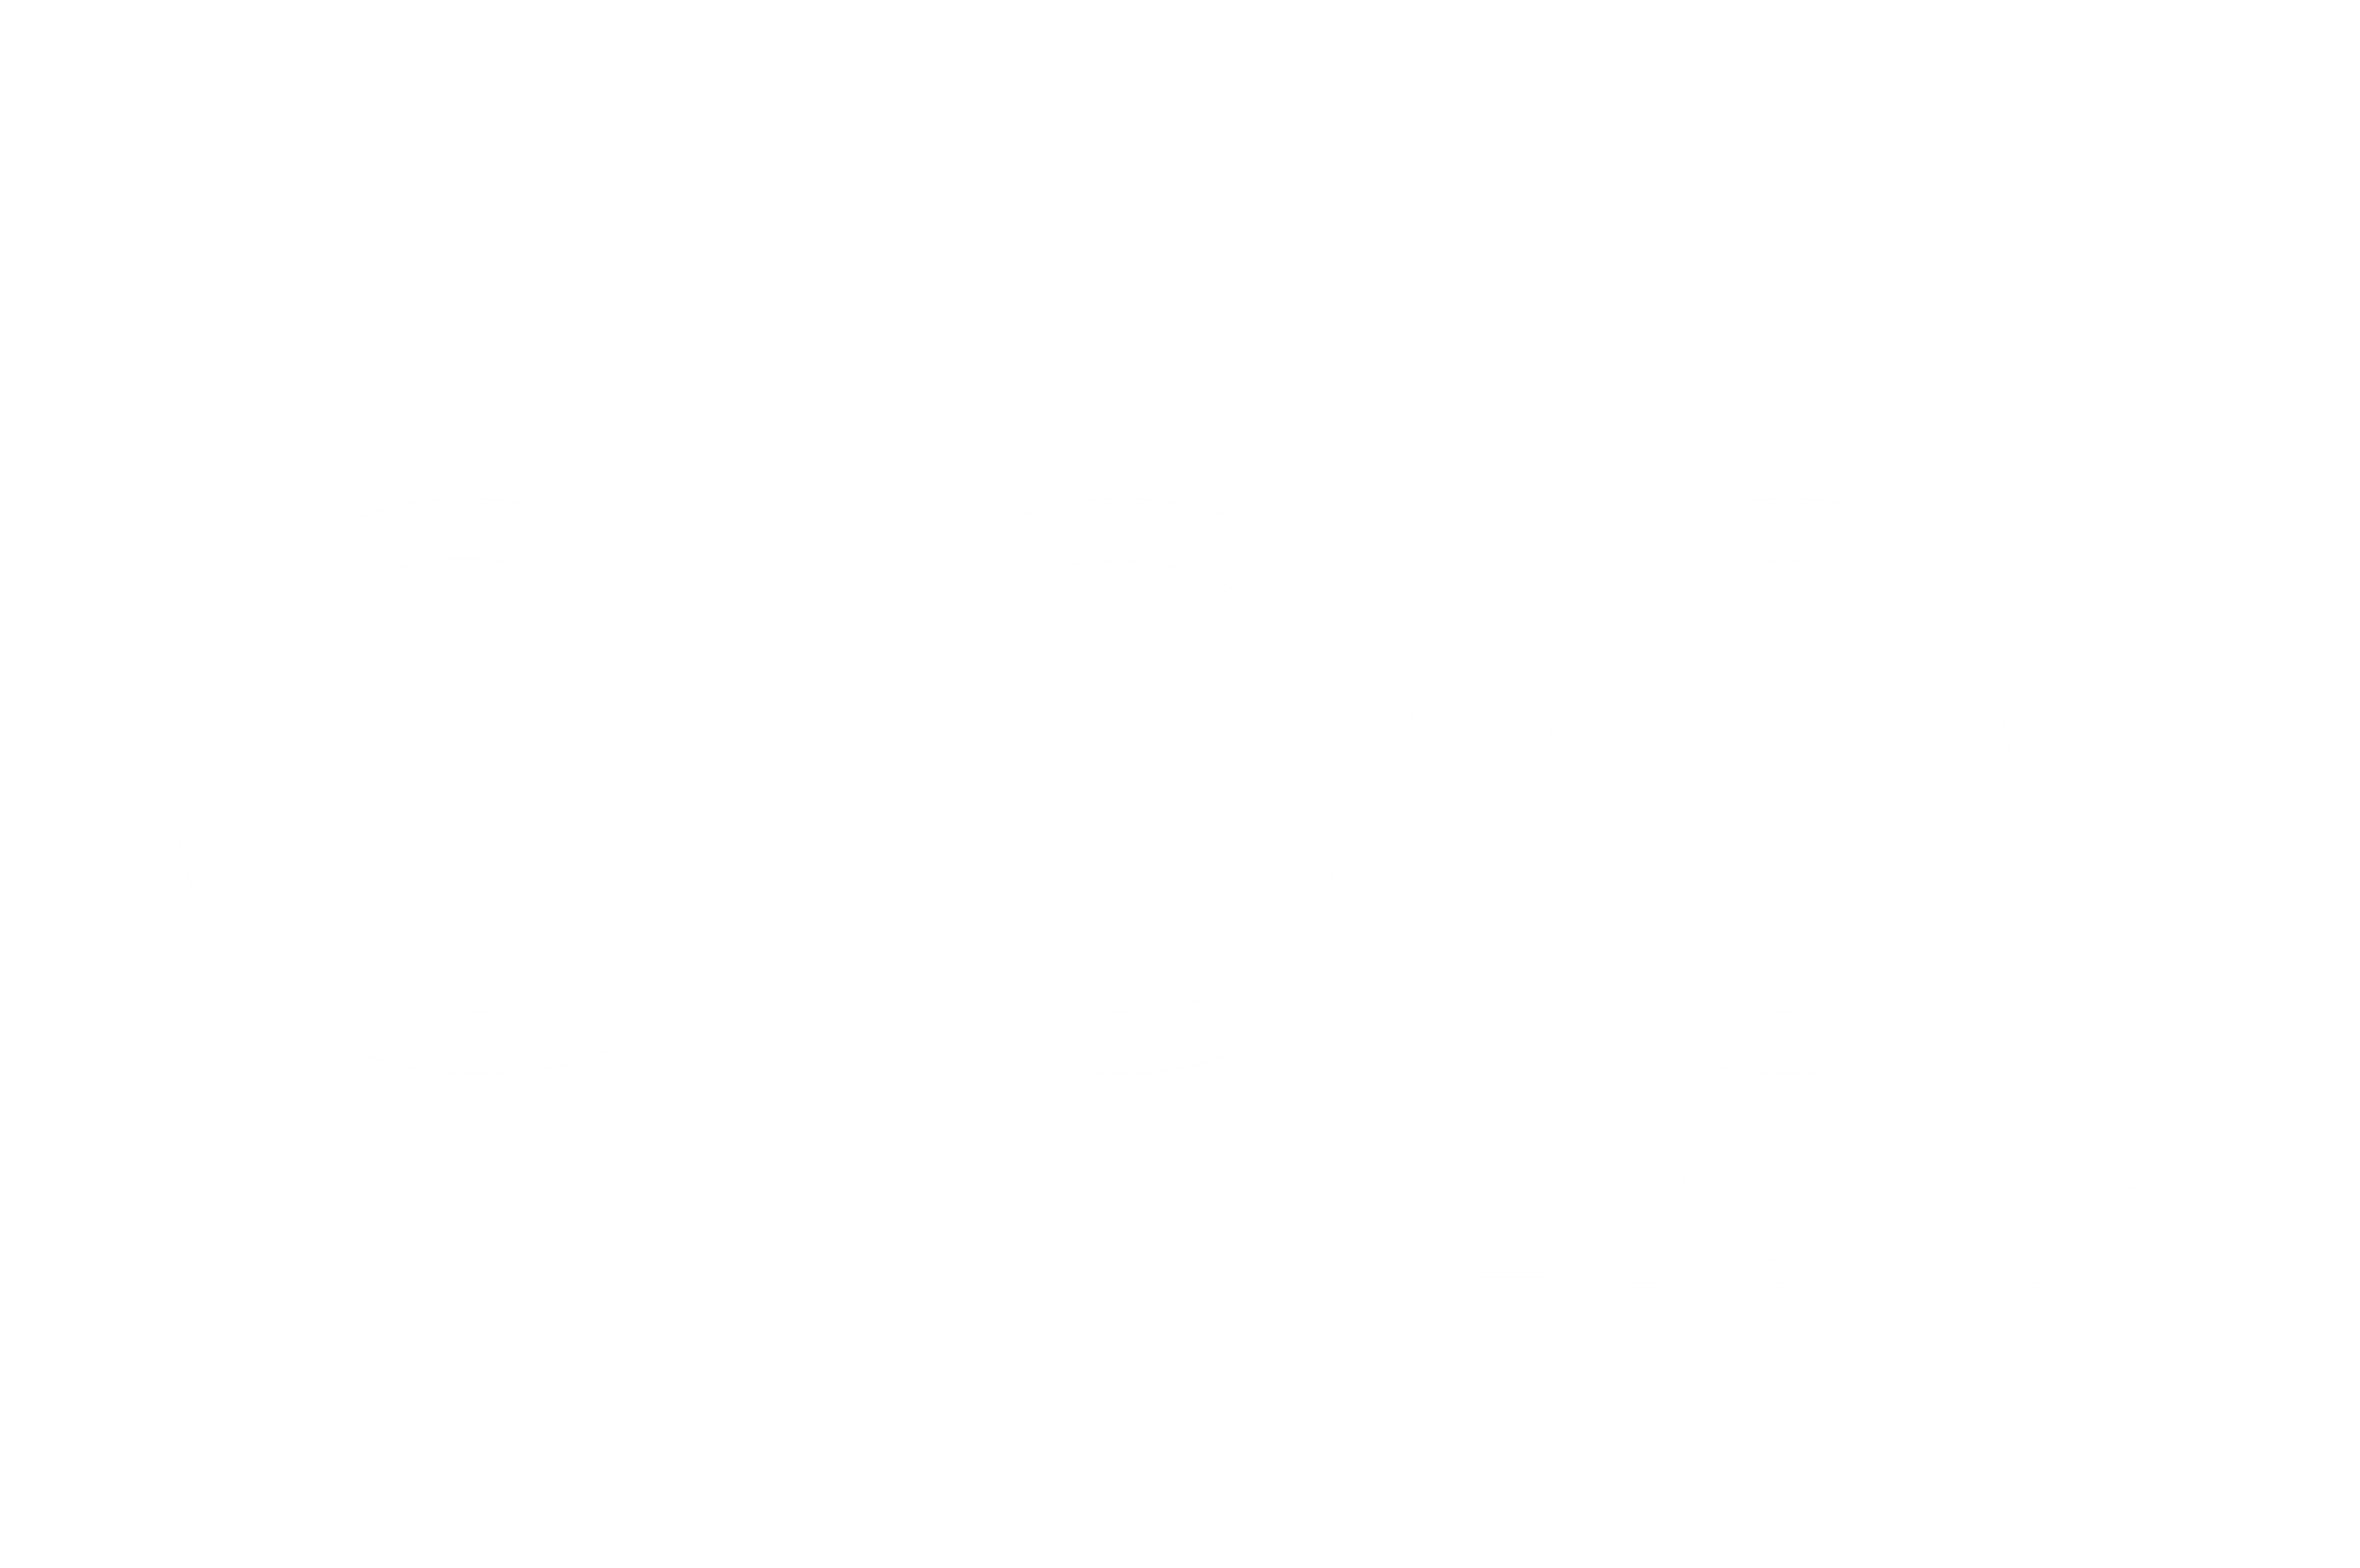 EBP South